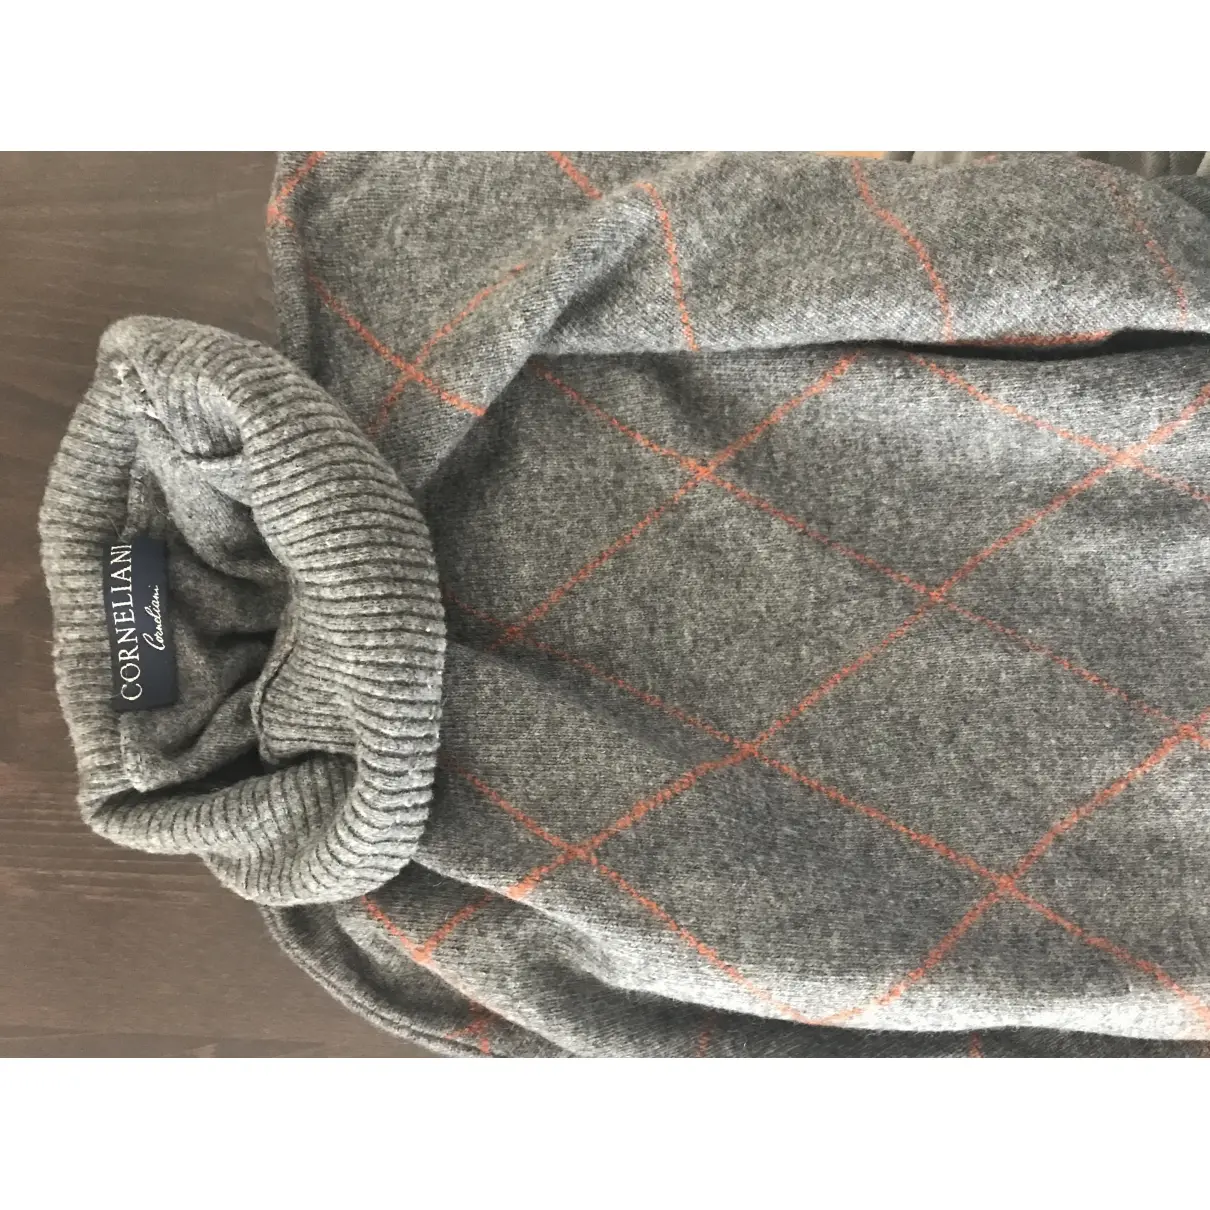 Luxury Corneliani Knitwear & Sweatshirts Men